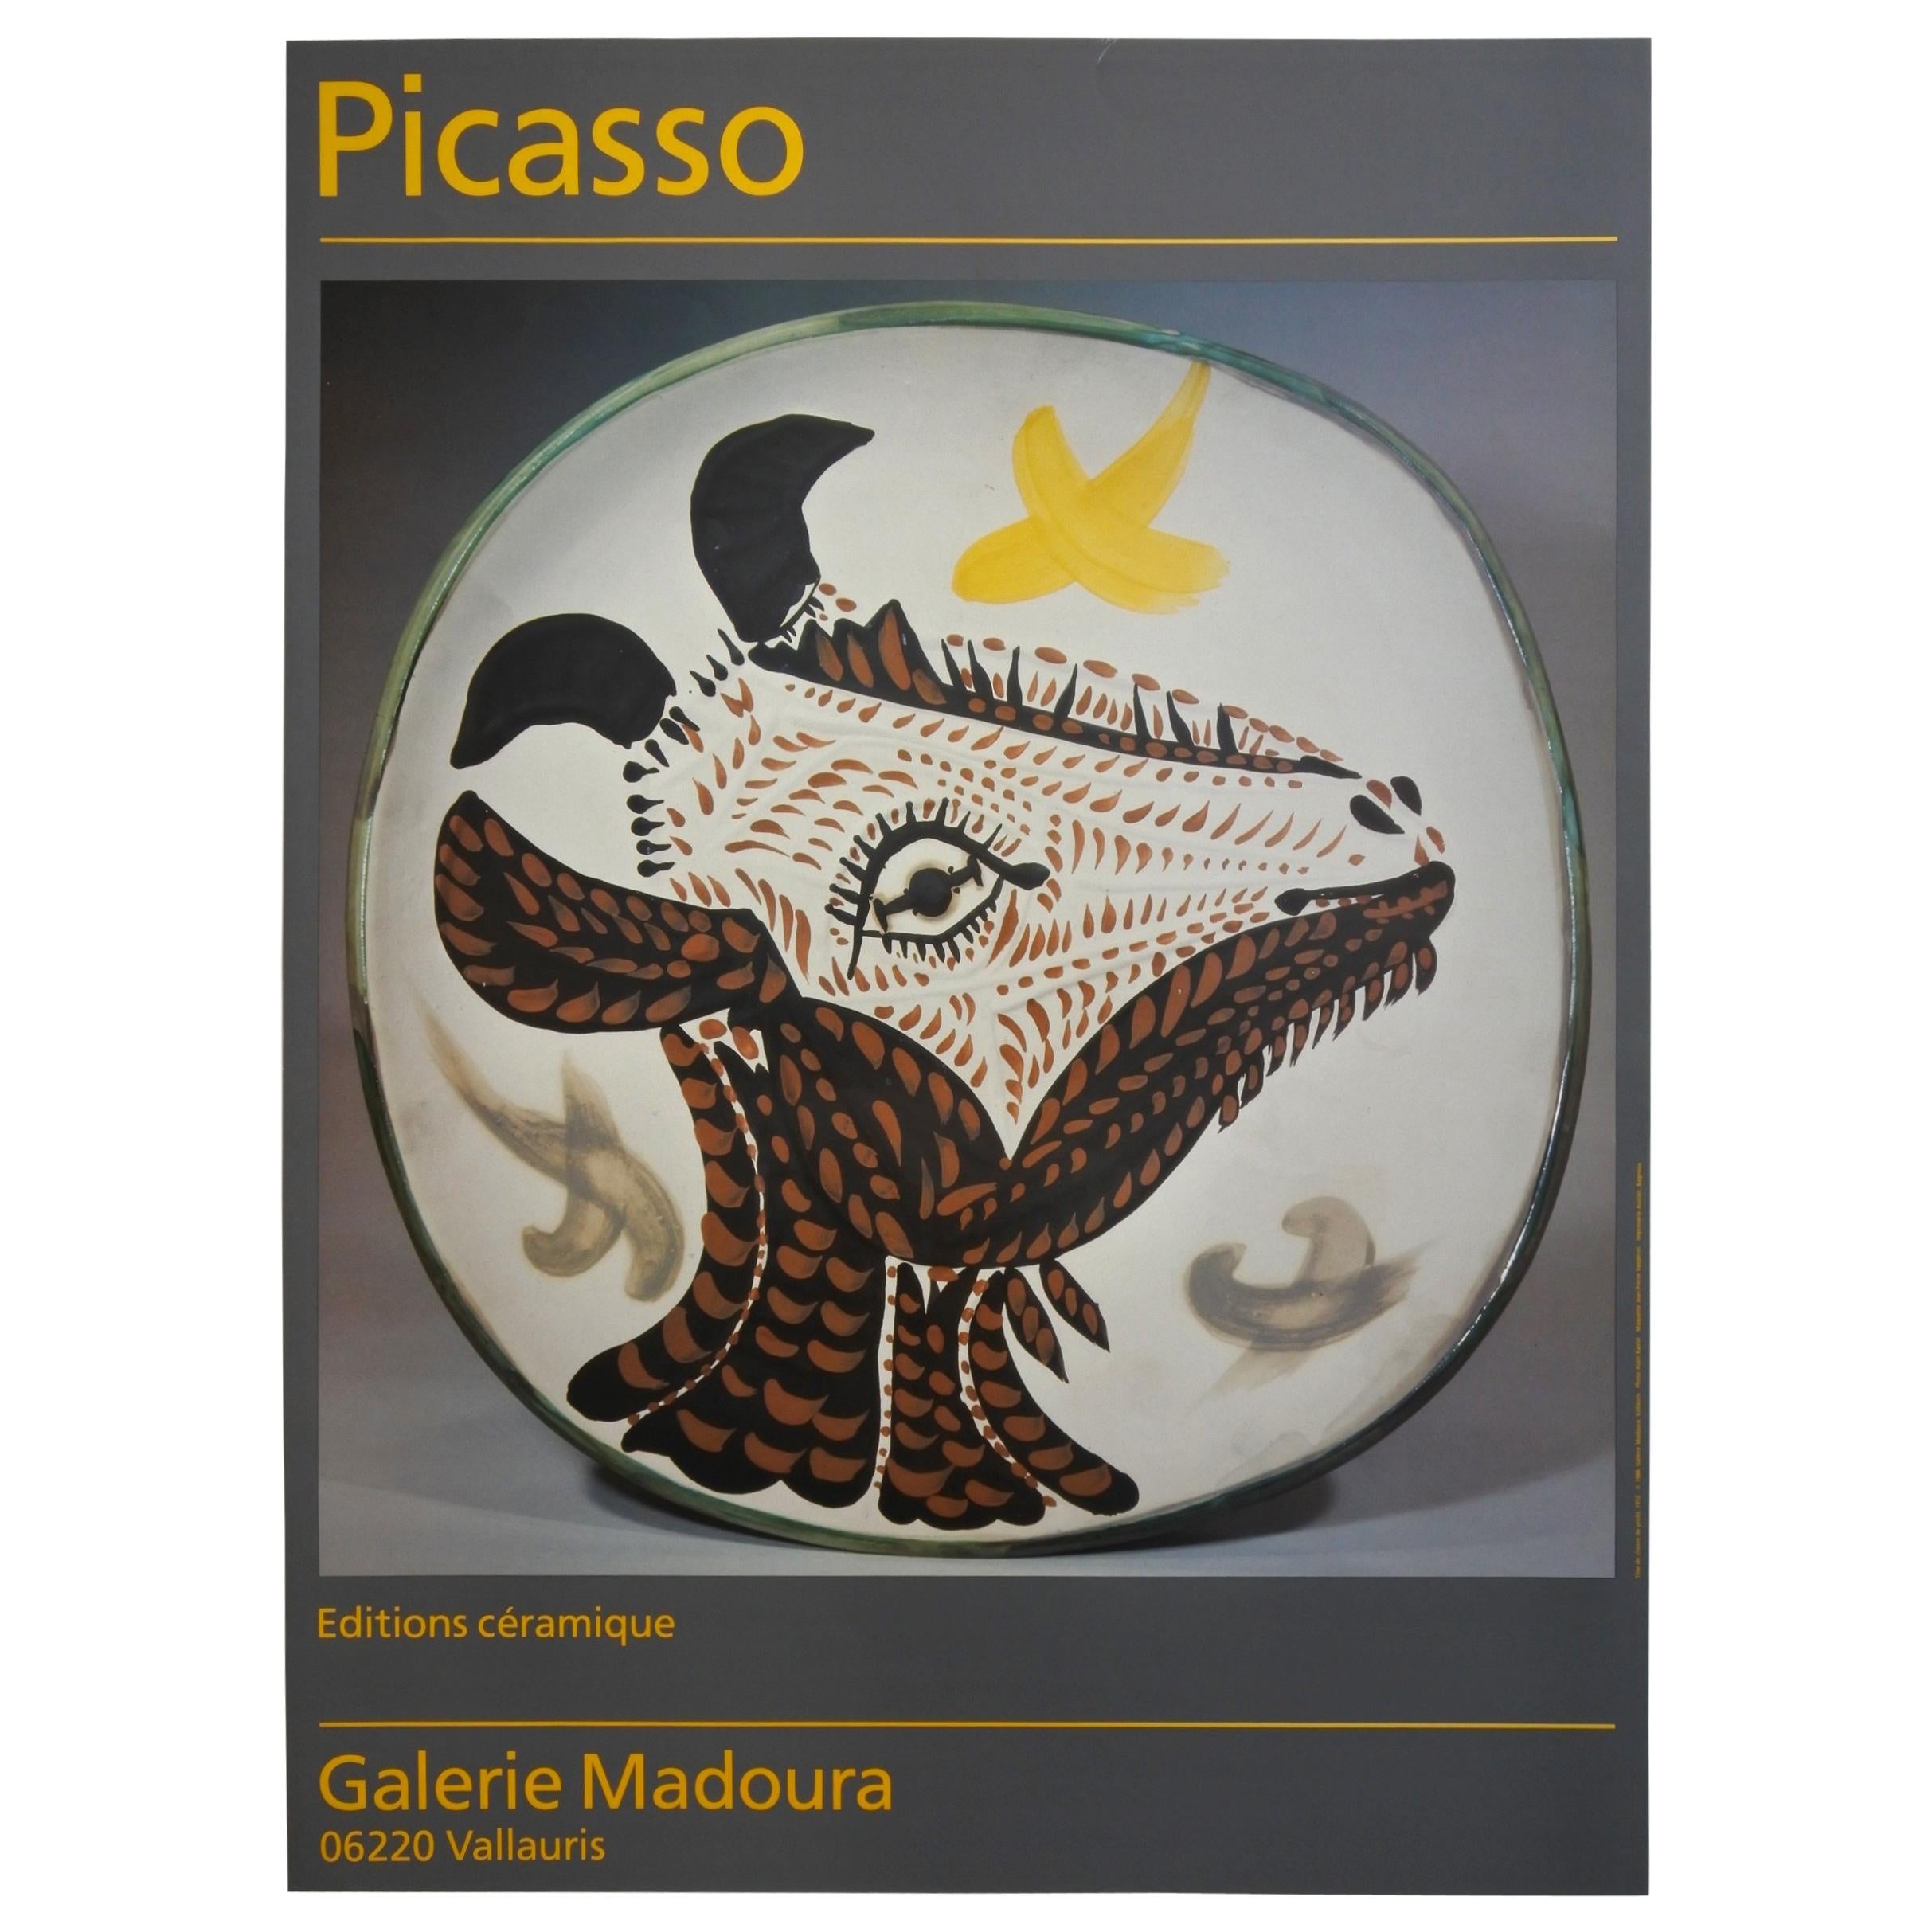 Pablo Picasso Ceramics Exhibition Poster, Galerie Madoura, Vallauris France